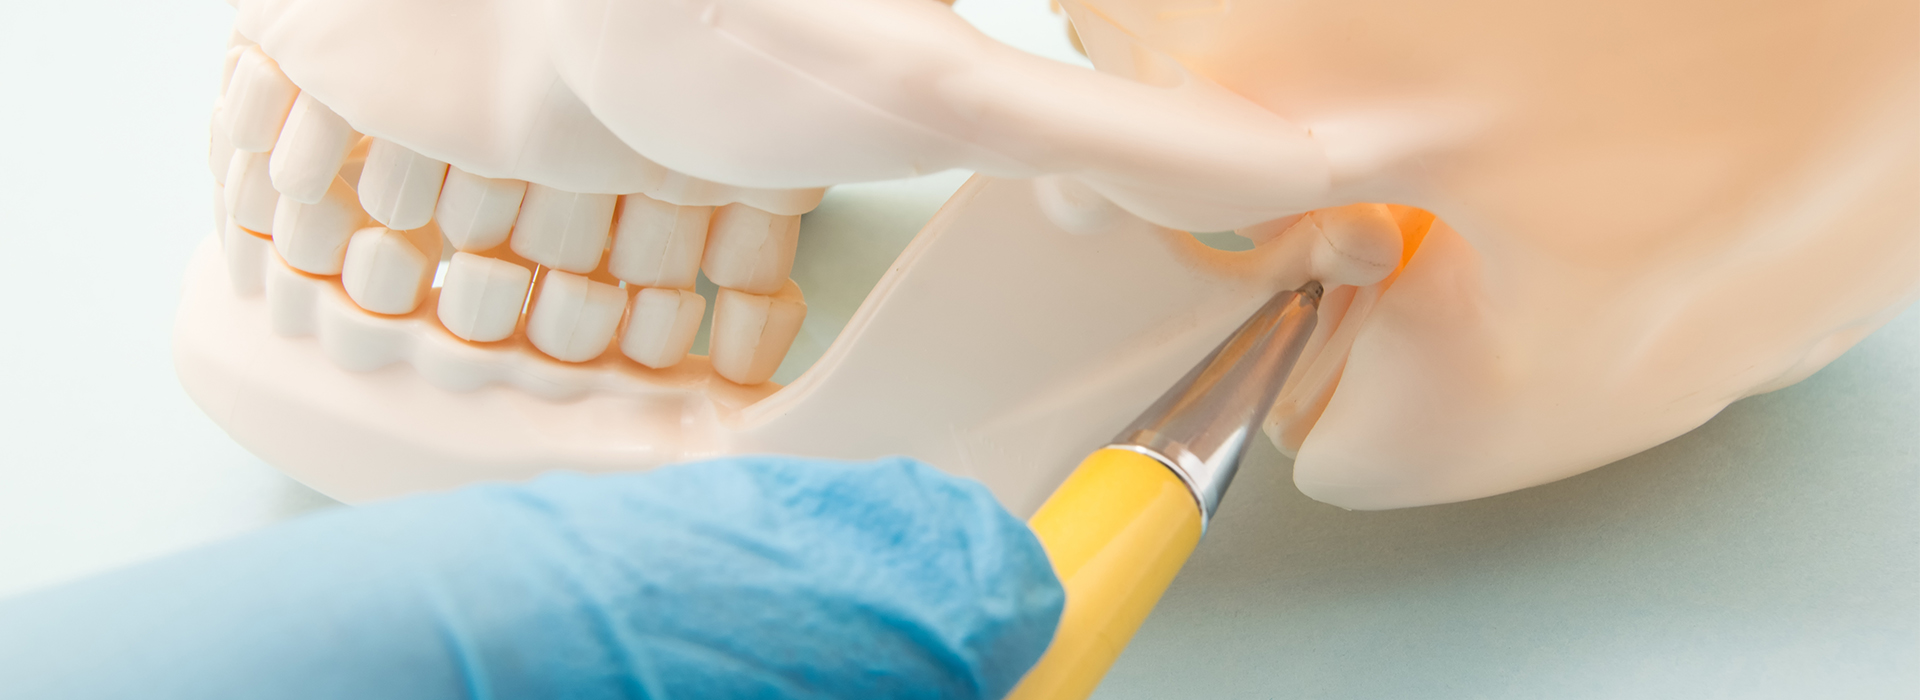 NoblePro Dental | LANAP reg , Inlays  amp  Onlays and Dental Lab